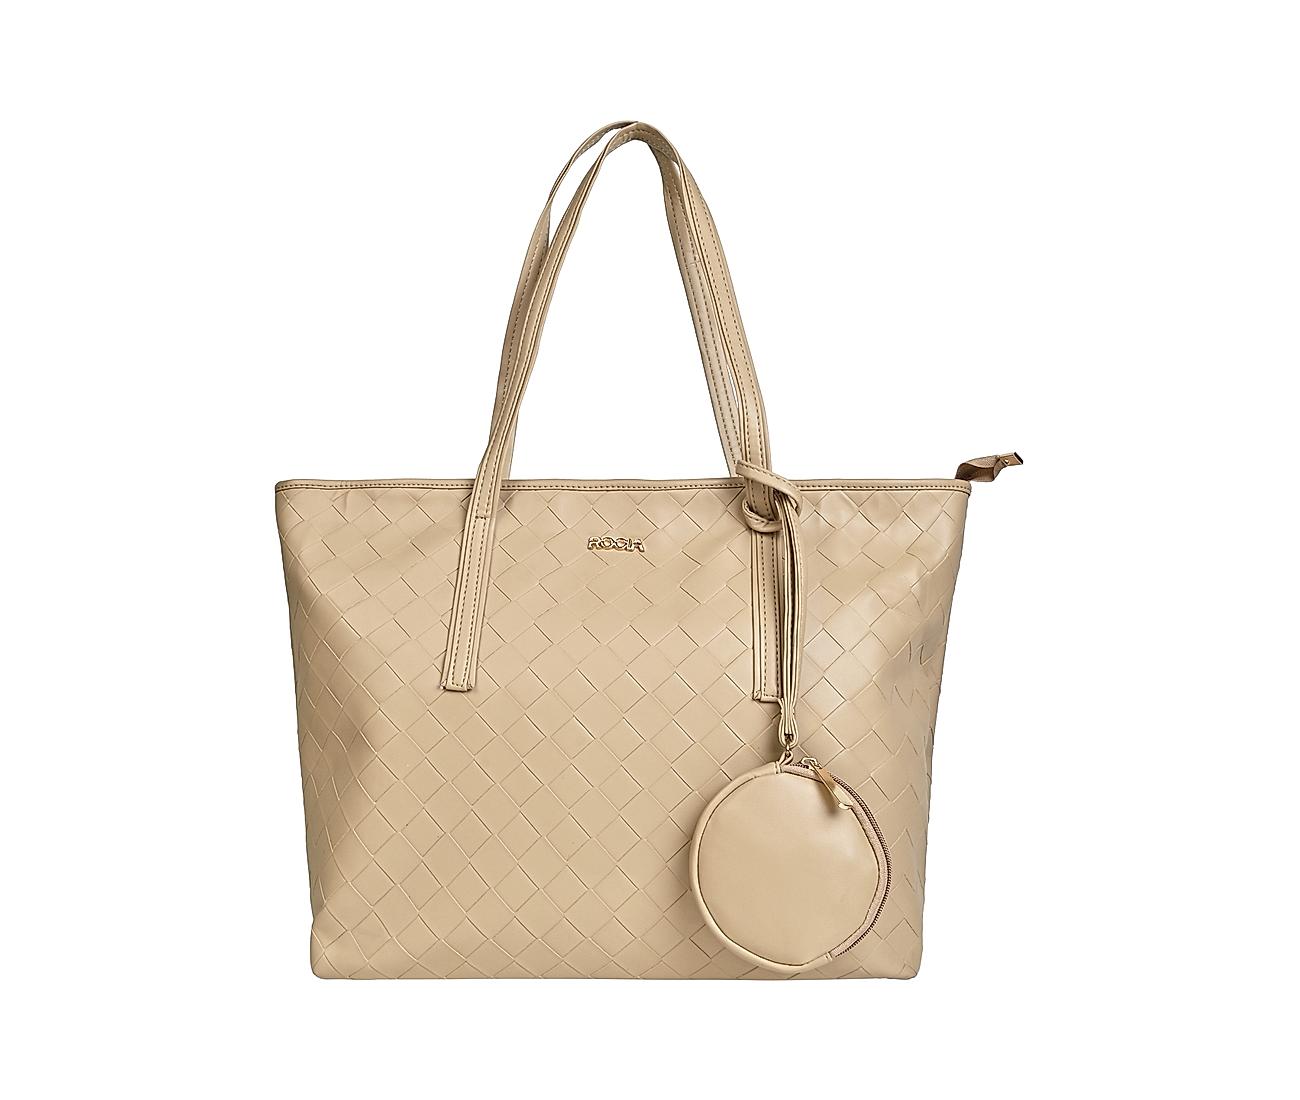 Guess Bag 💗 | Girly bags, Guess bags, Trendy purses